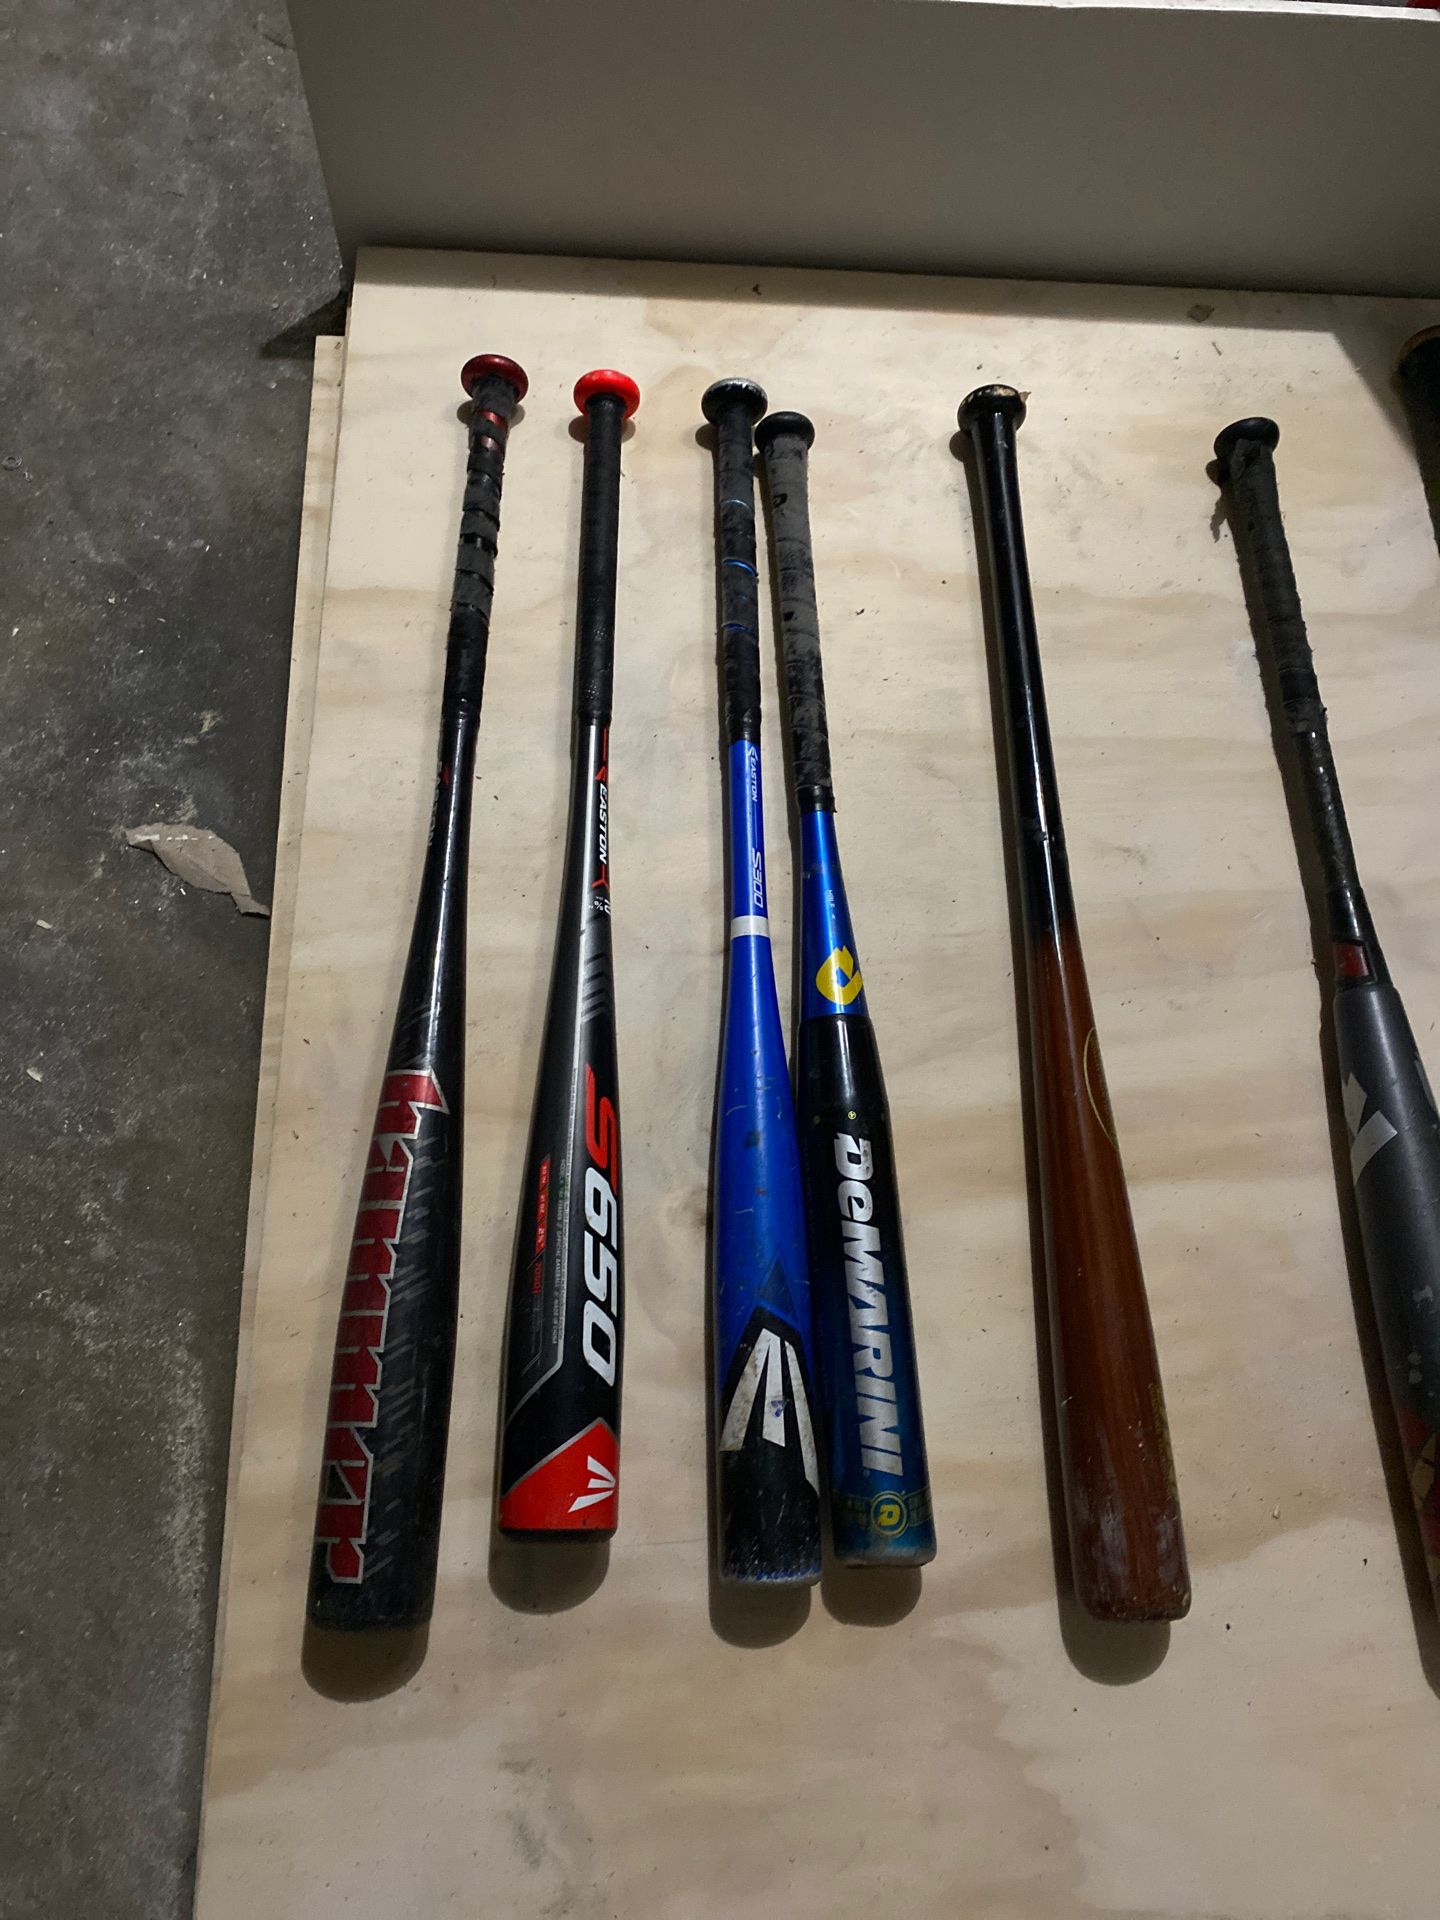 Baseball bats of all kind